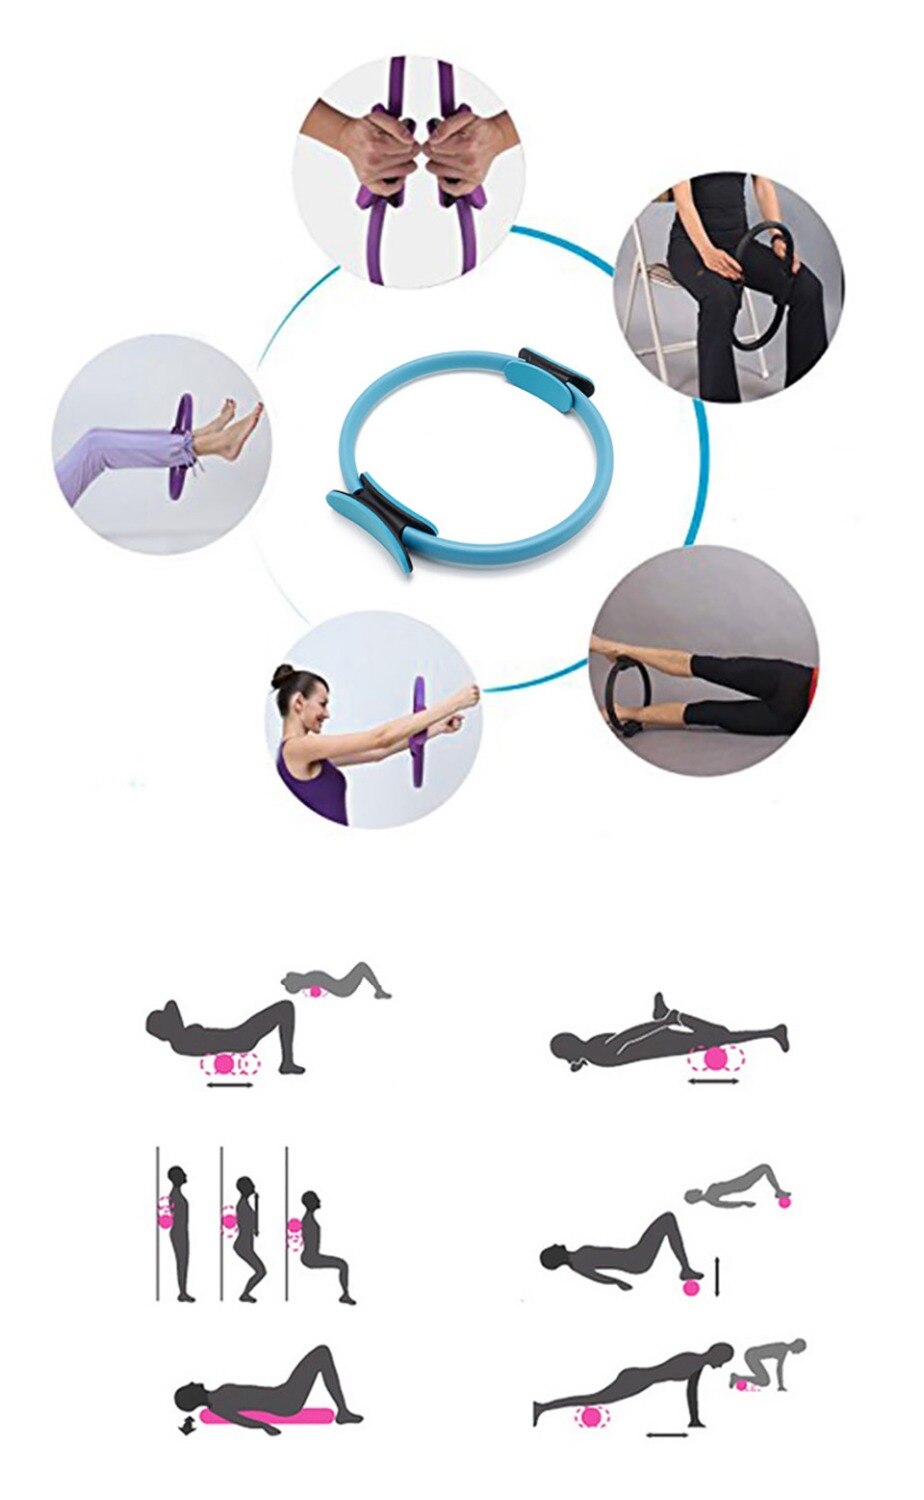 Quality-Yoga-Pilates-Ring-Magic-Wrap-Slimming-Body-Building-Training-Heavy-Duty-PP+NBR-Material-Yoga-Circle-5-Farbes